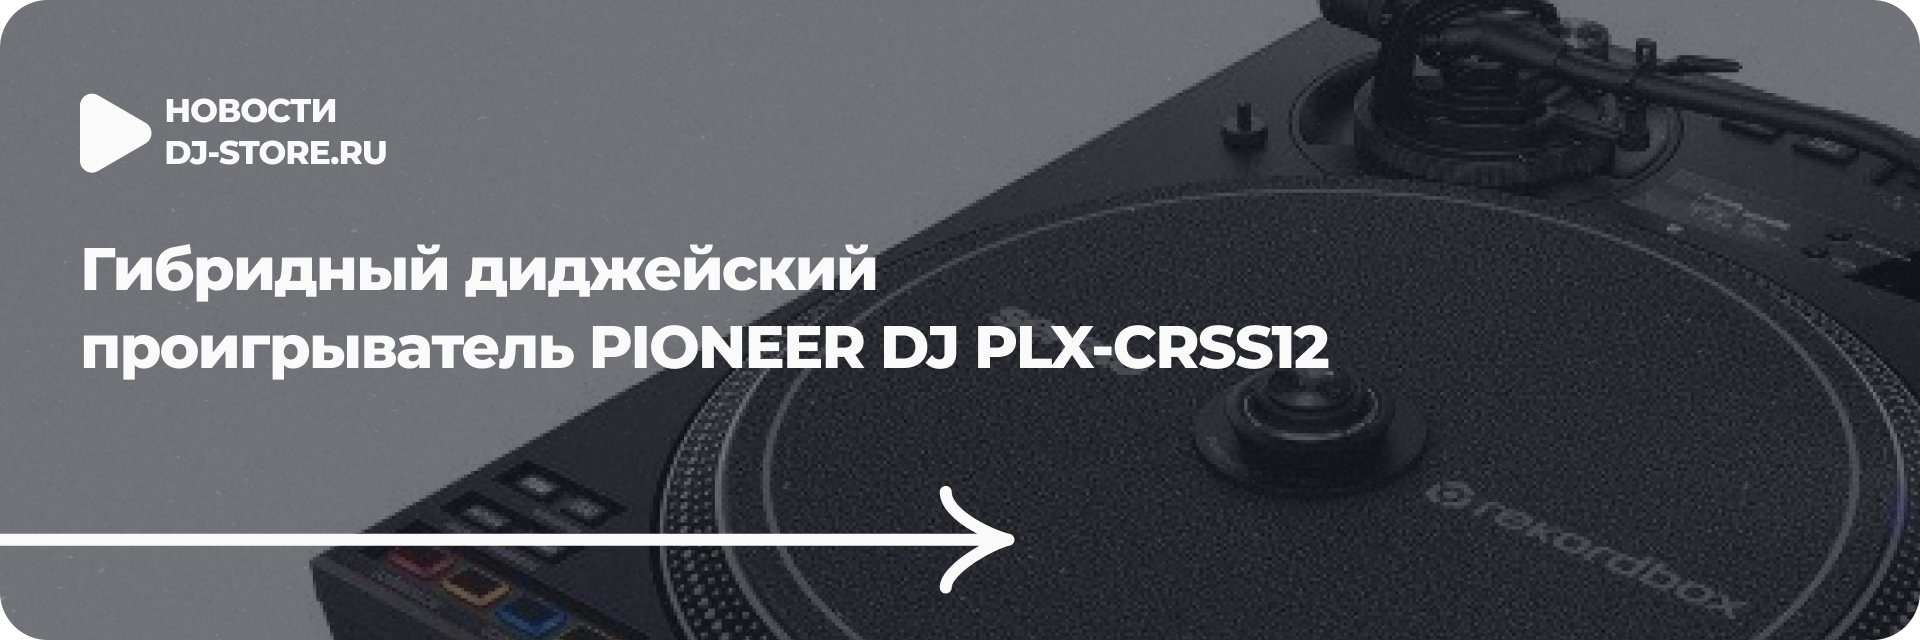 Диджейский проигрыватель Pioneer DJ PLX-CRSS12